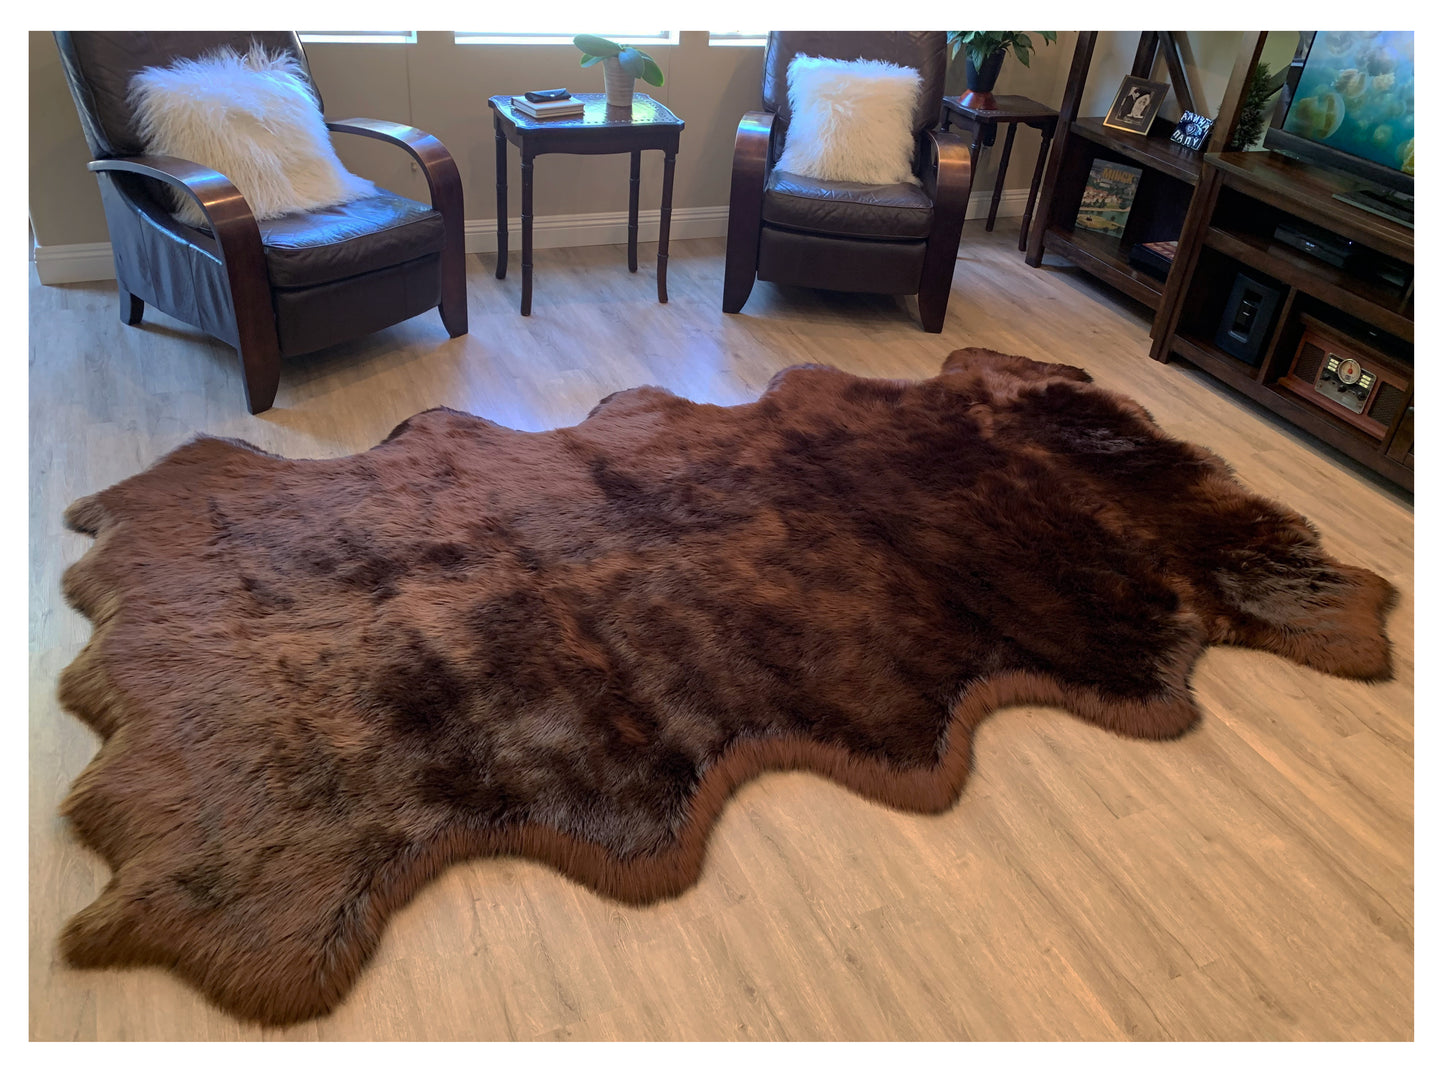 Faux  sheepskin rug Free Shape Decto Ten Pelt 6'X10' (180cm x 300cm)